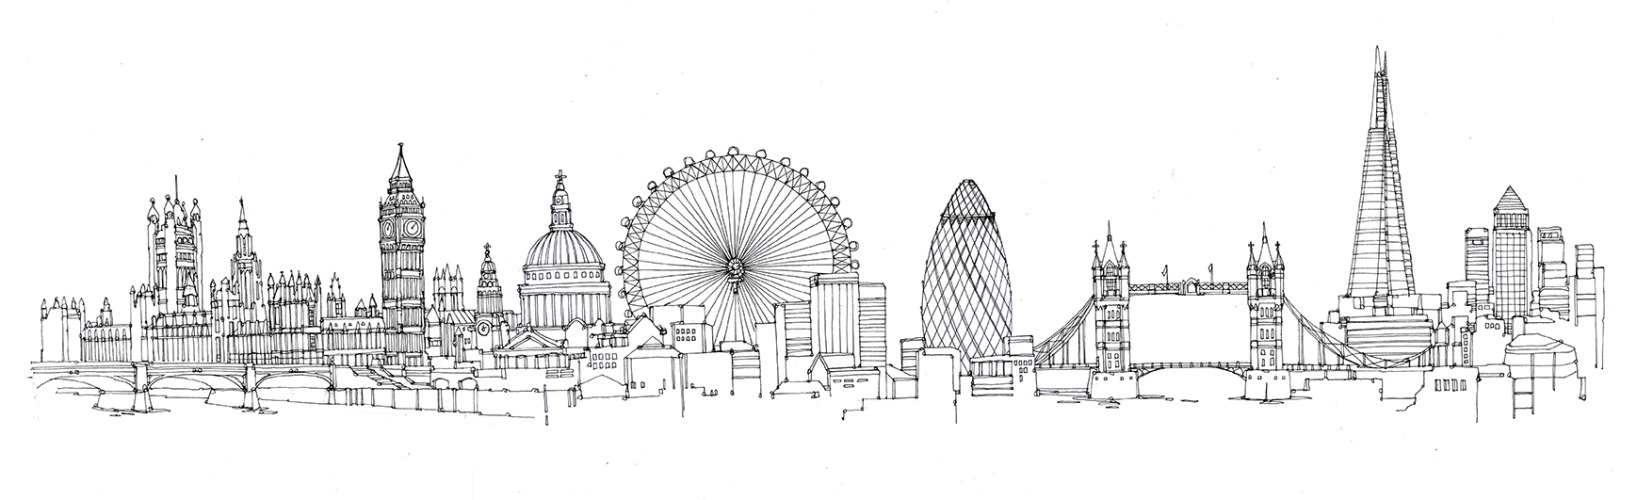 London skyline drawing.